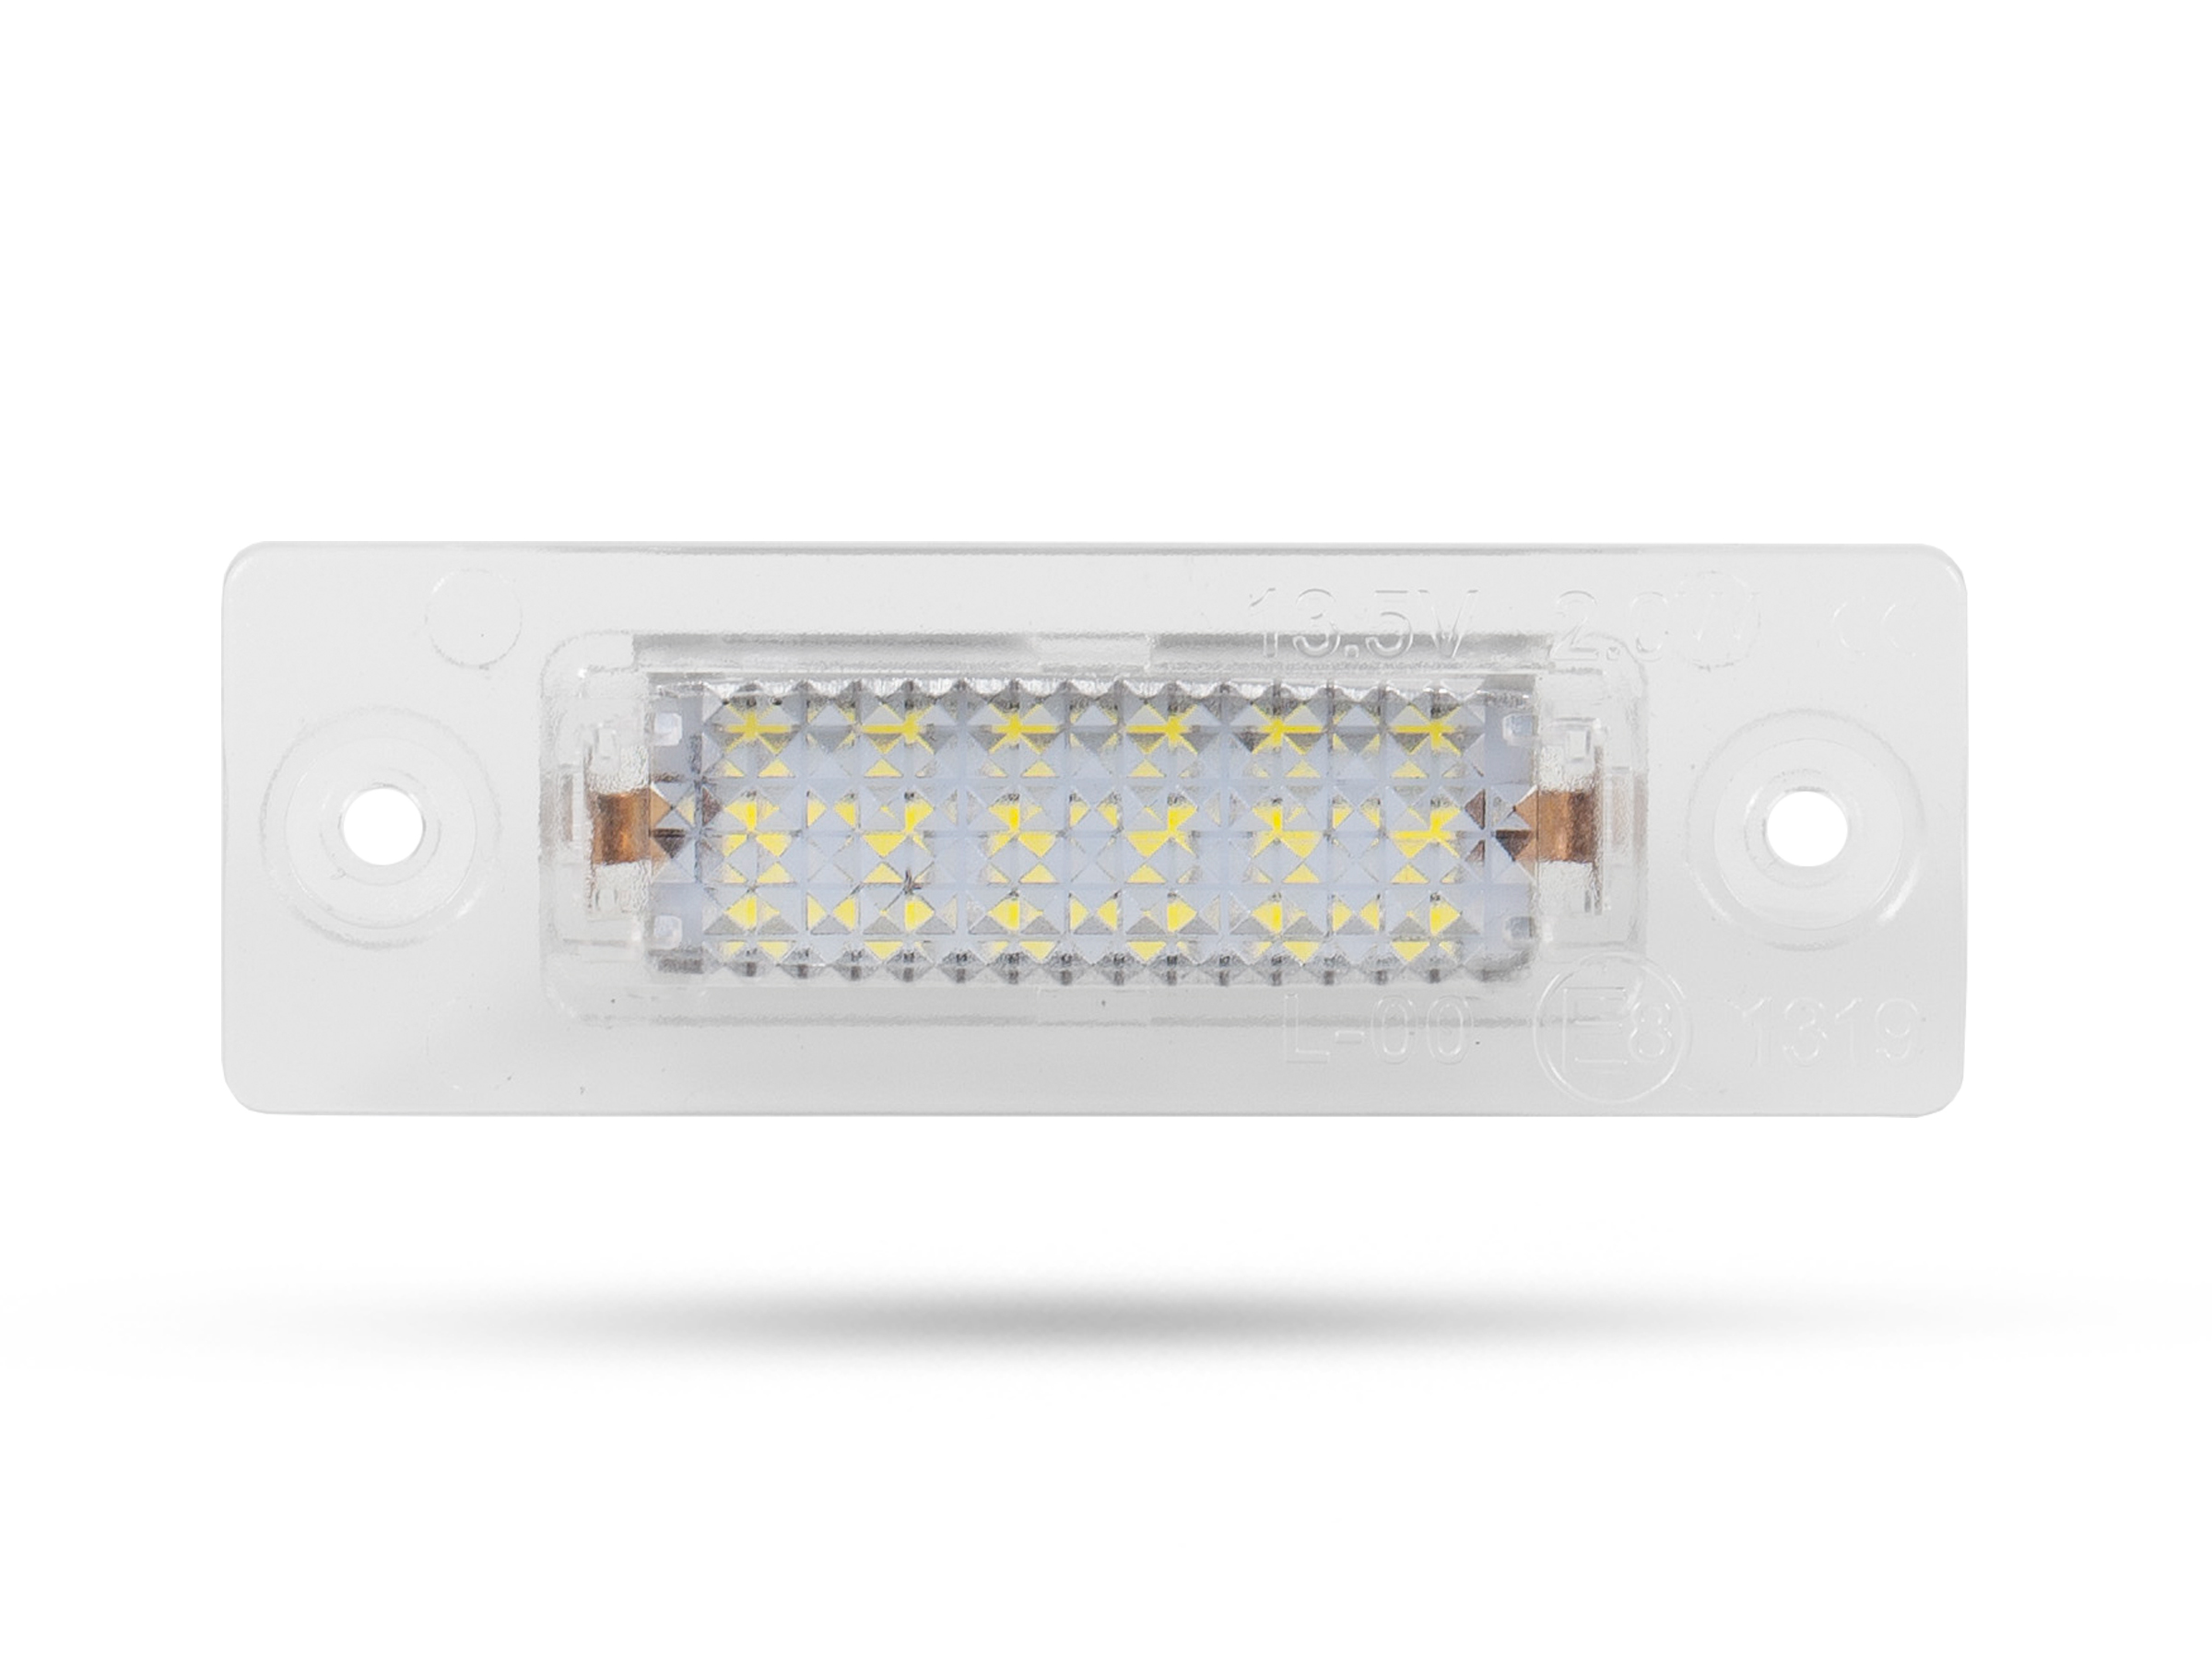 LED Kennzeichenbeleuchtung Module VW Caddy Bj.04-14, mit E-Prüfzeichen, LED Kennzeichenbeleuchtung für VW, LED Kennzeichenbeleuchtung